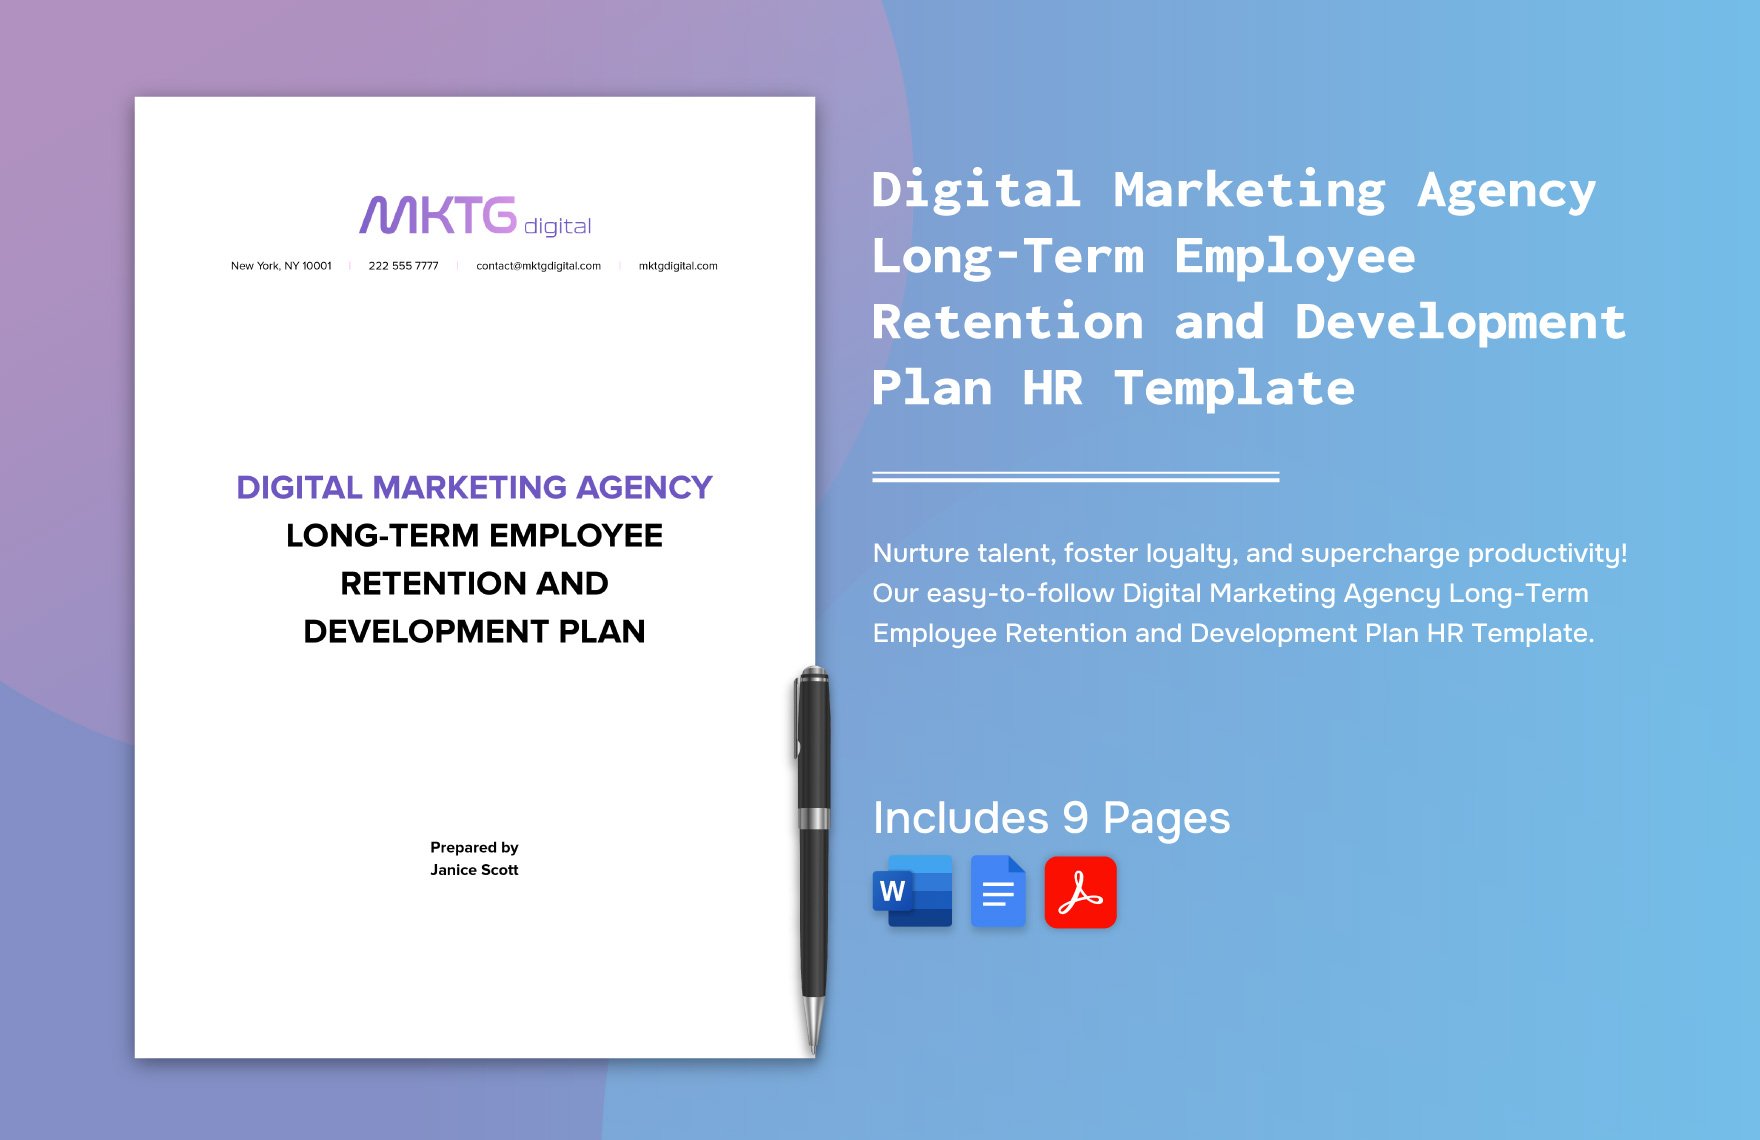 Digital Marketing Agency Long-Term Employee Retention and Development Plan HR Template